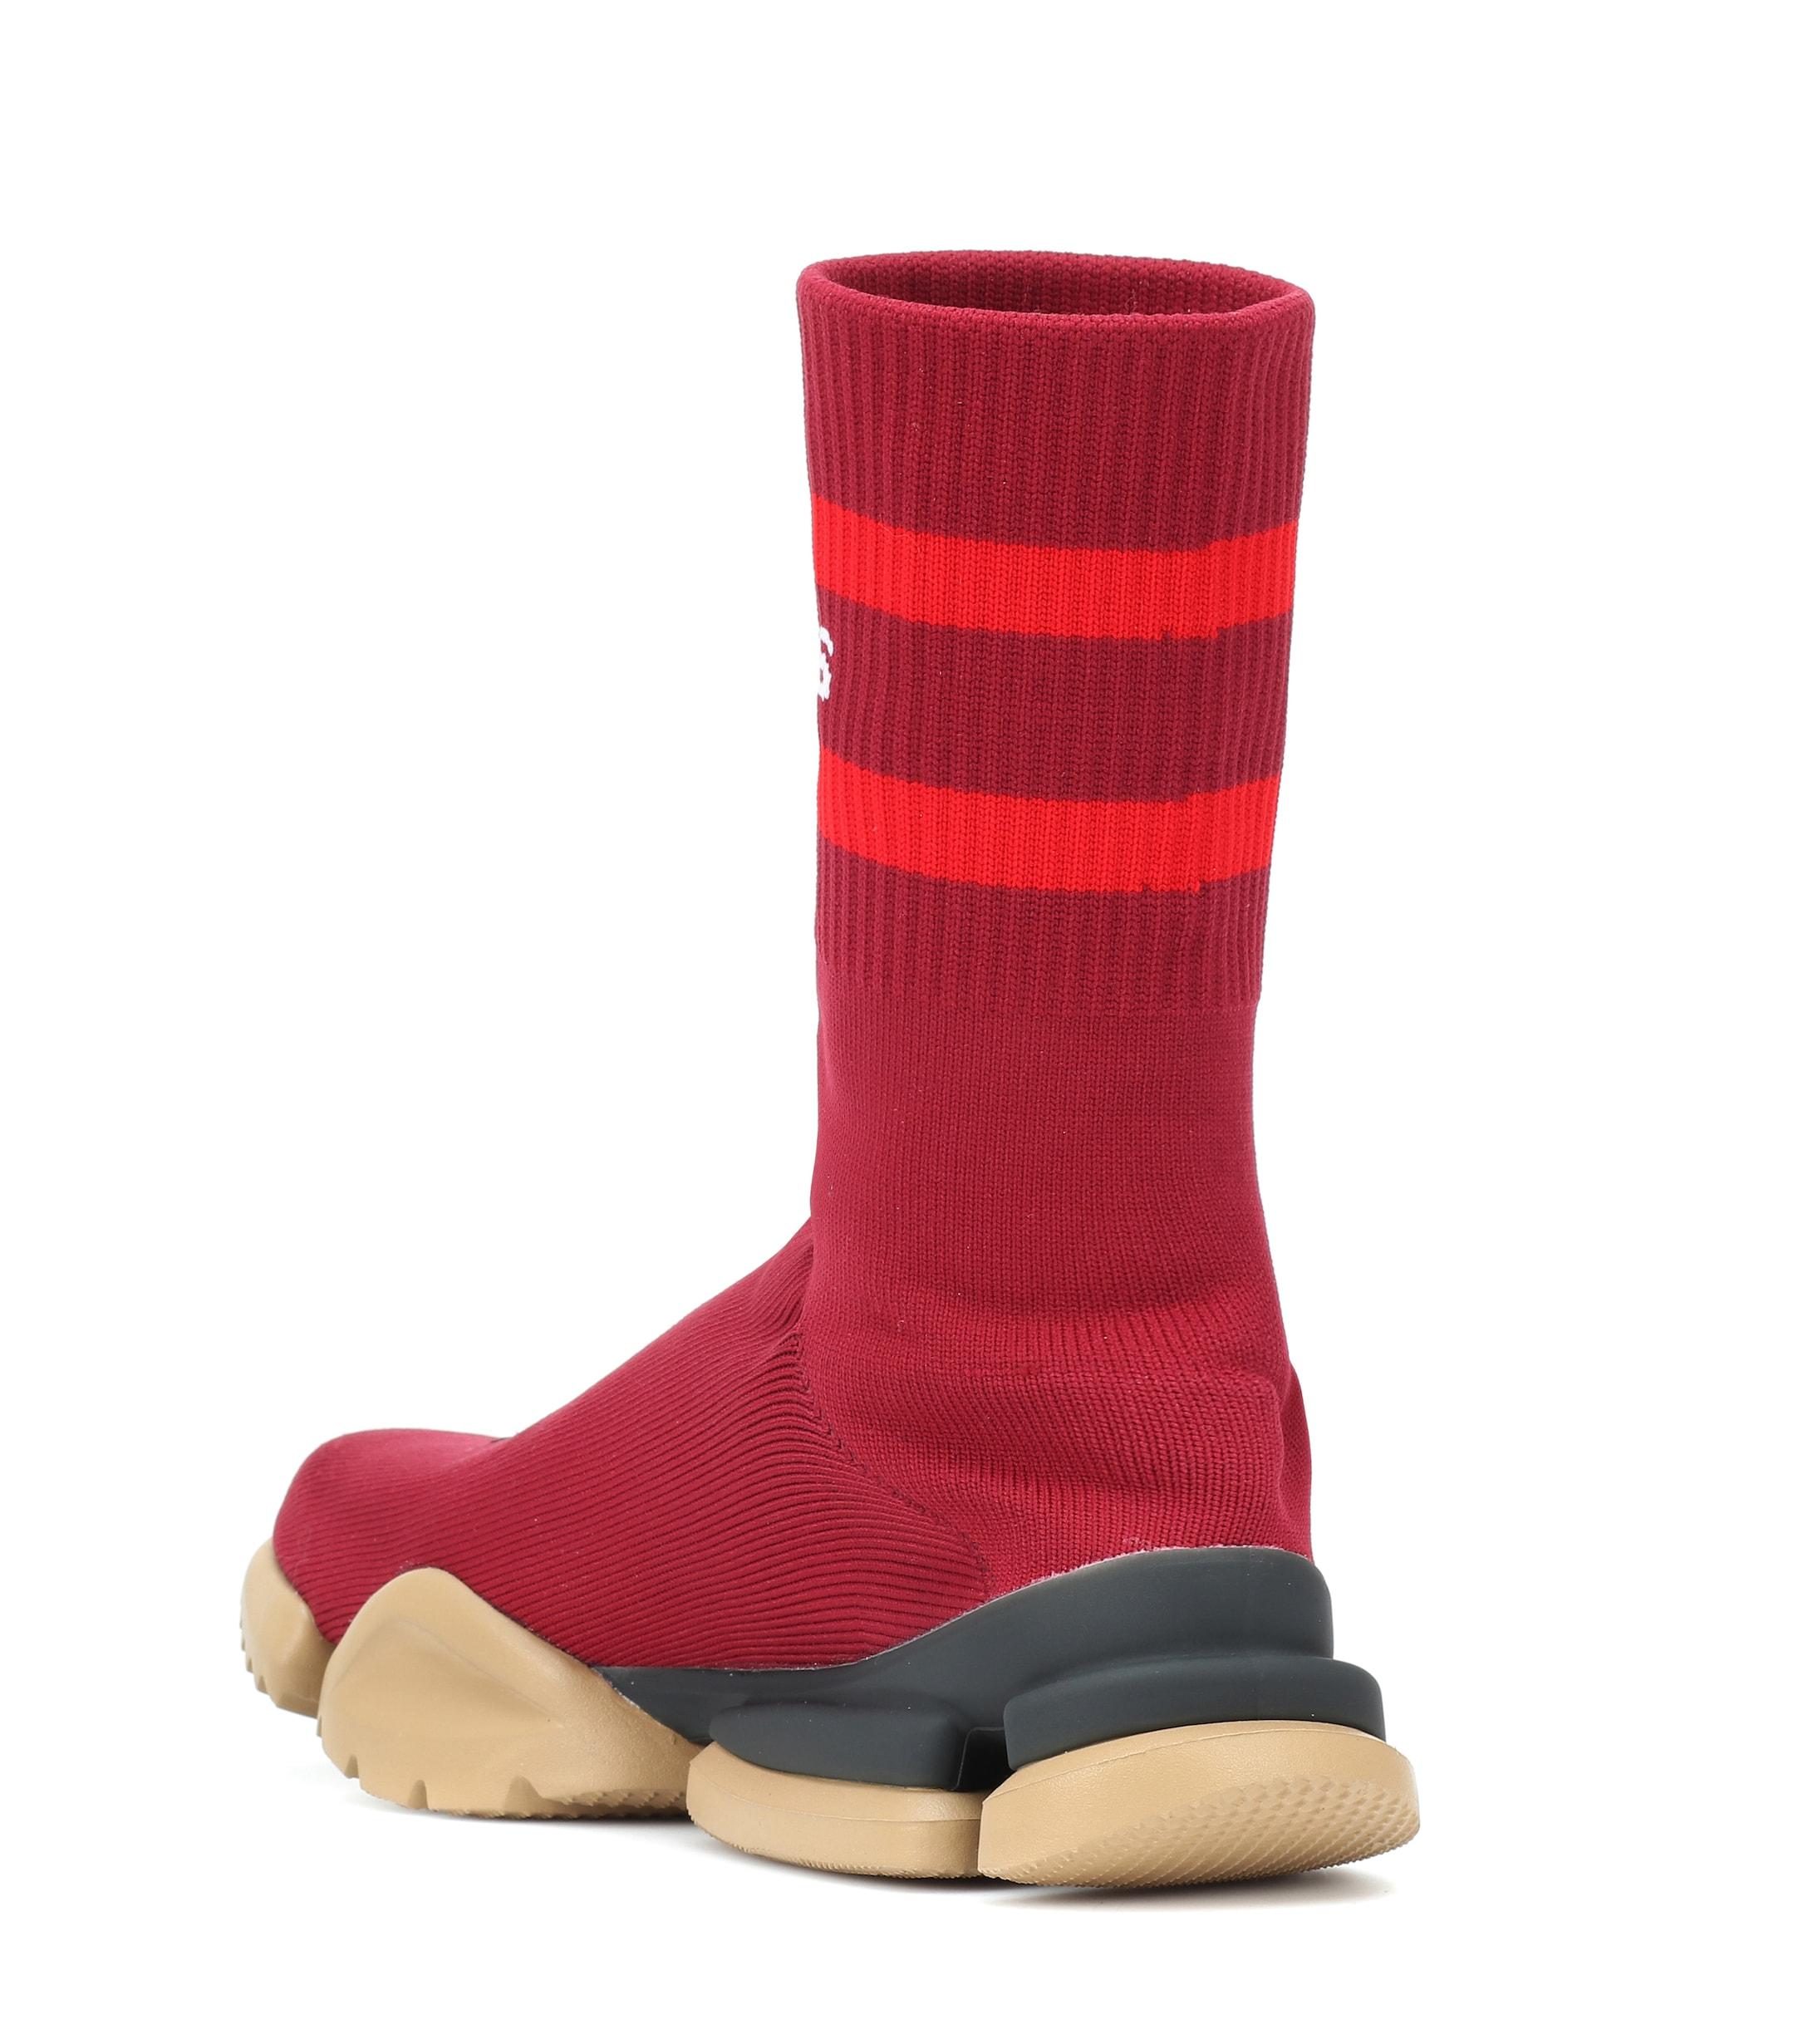 100% Auth VETEMENTS x Reebok Classic sock sneakers 37.5 NIB $880 +